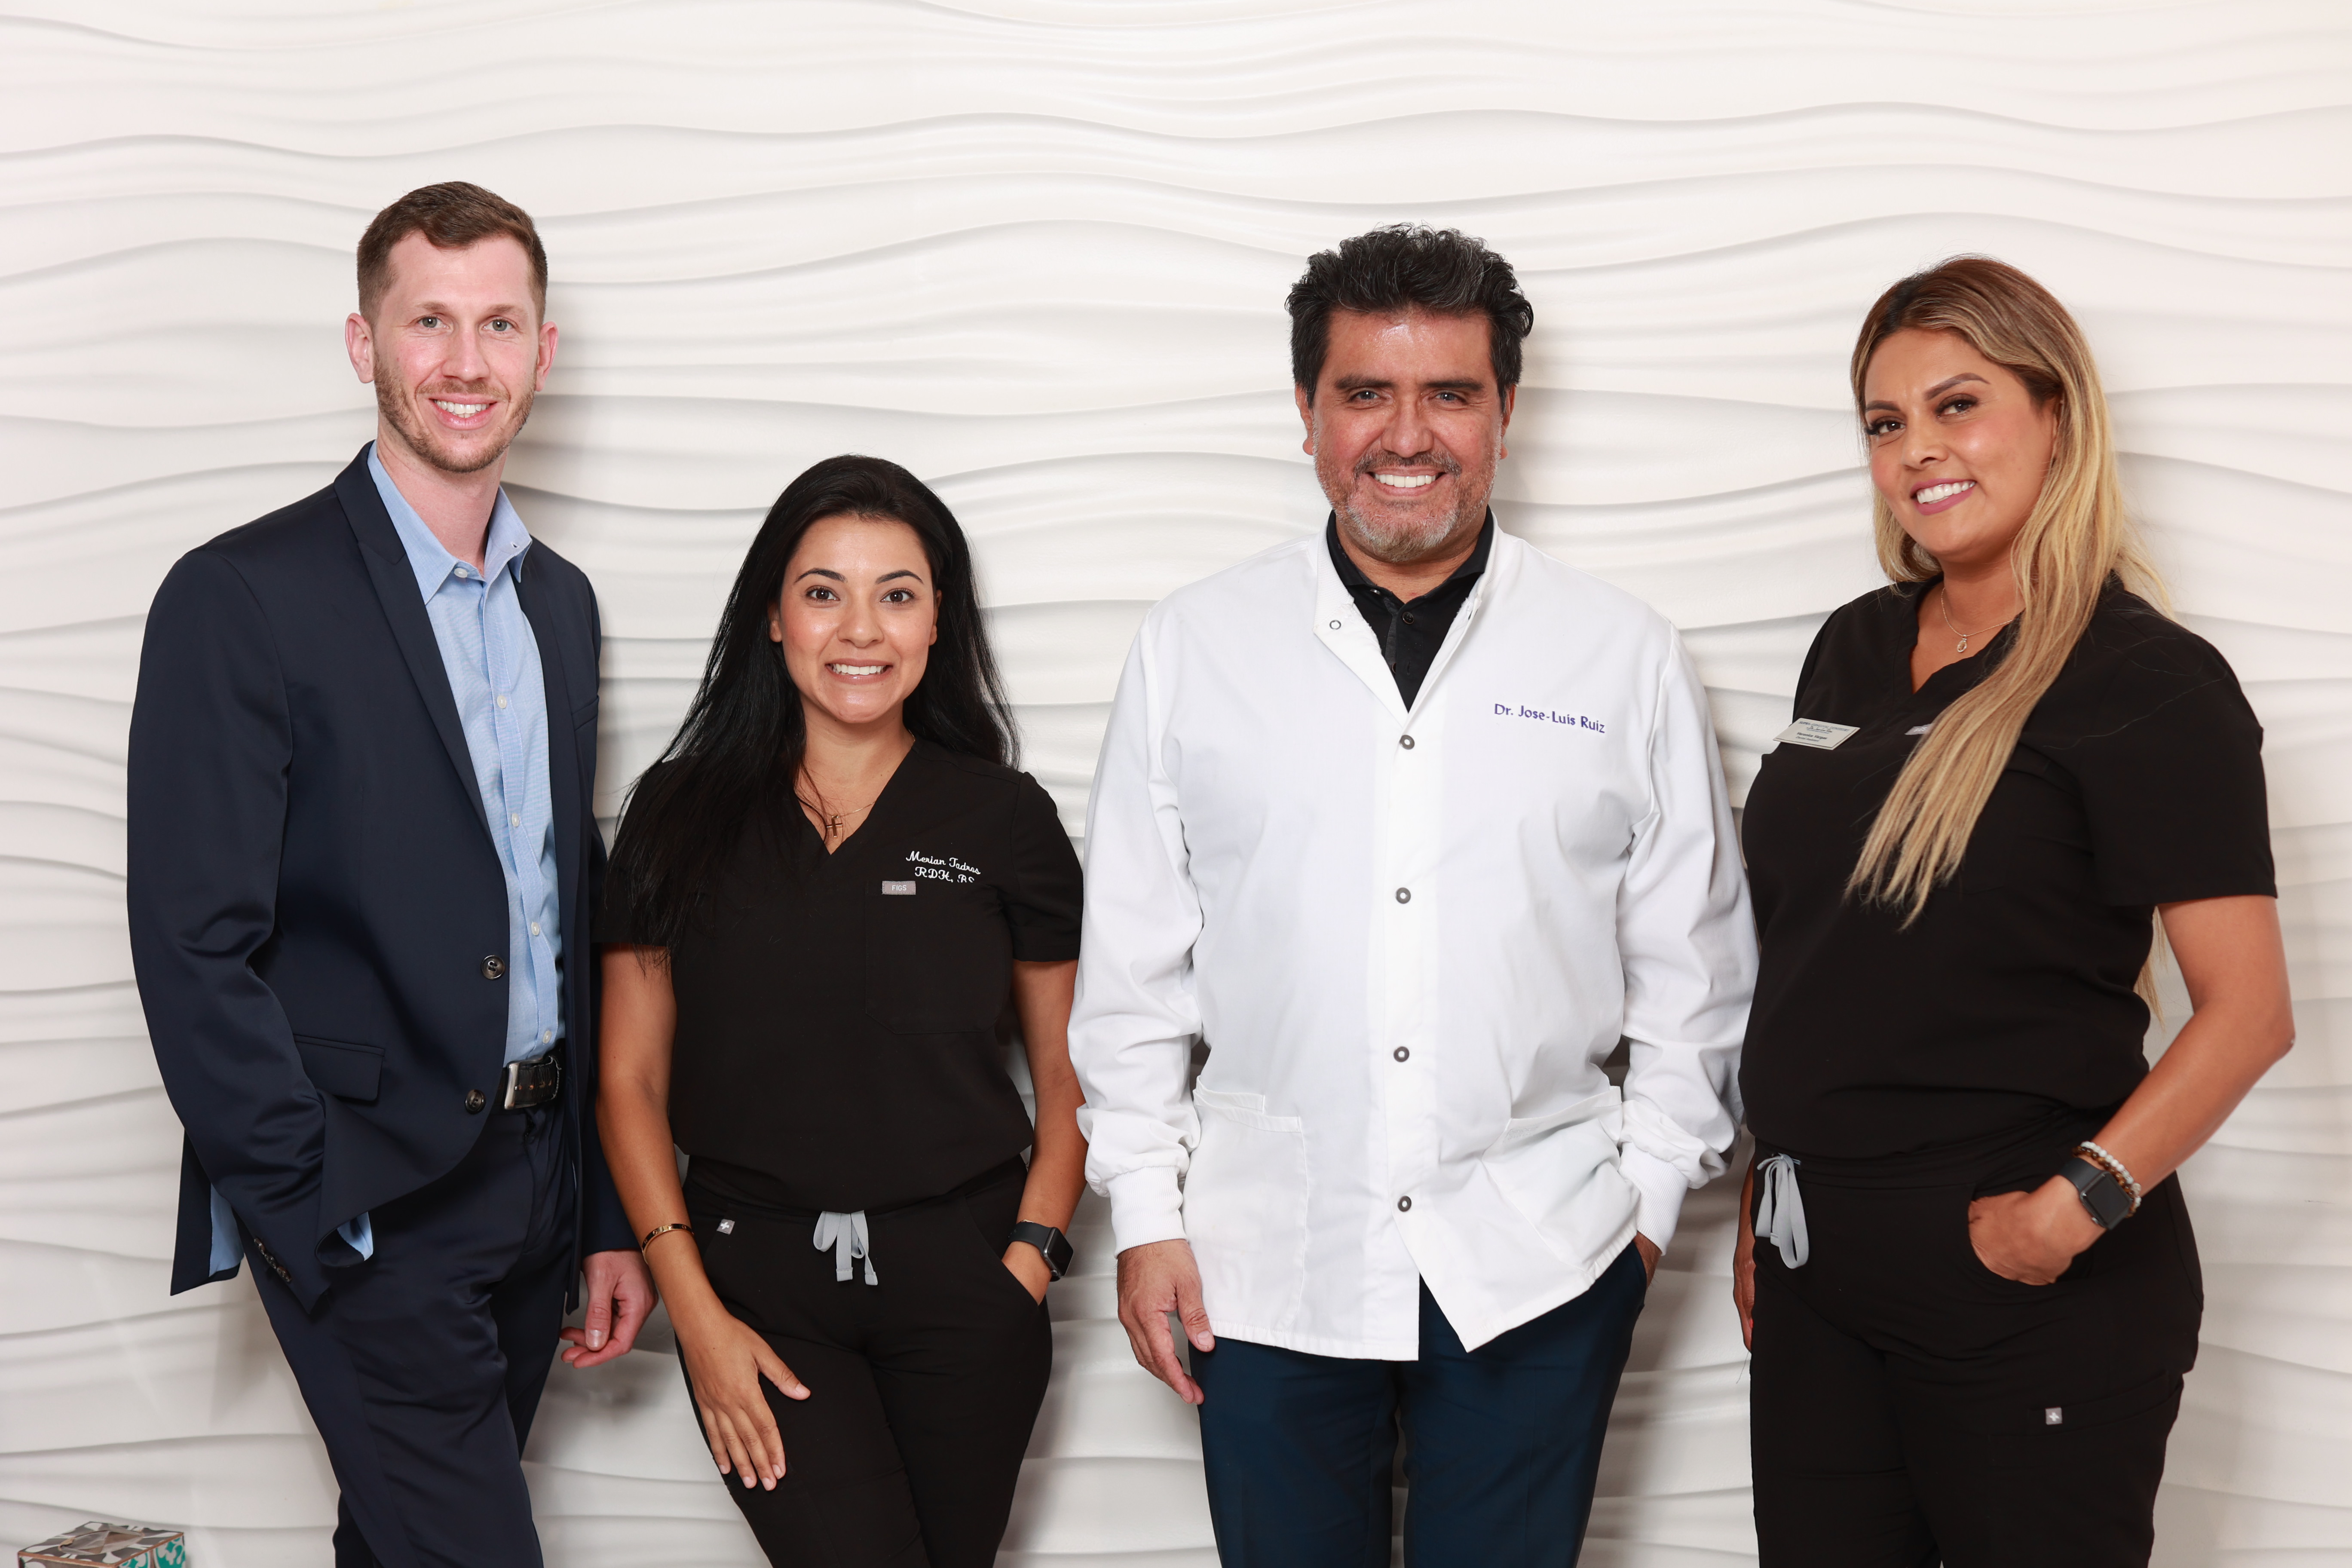 The Supra Gingival Dentistry by Doctor Ruiz team